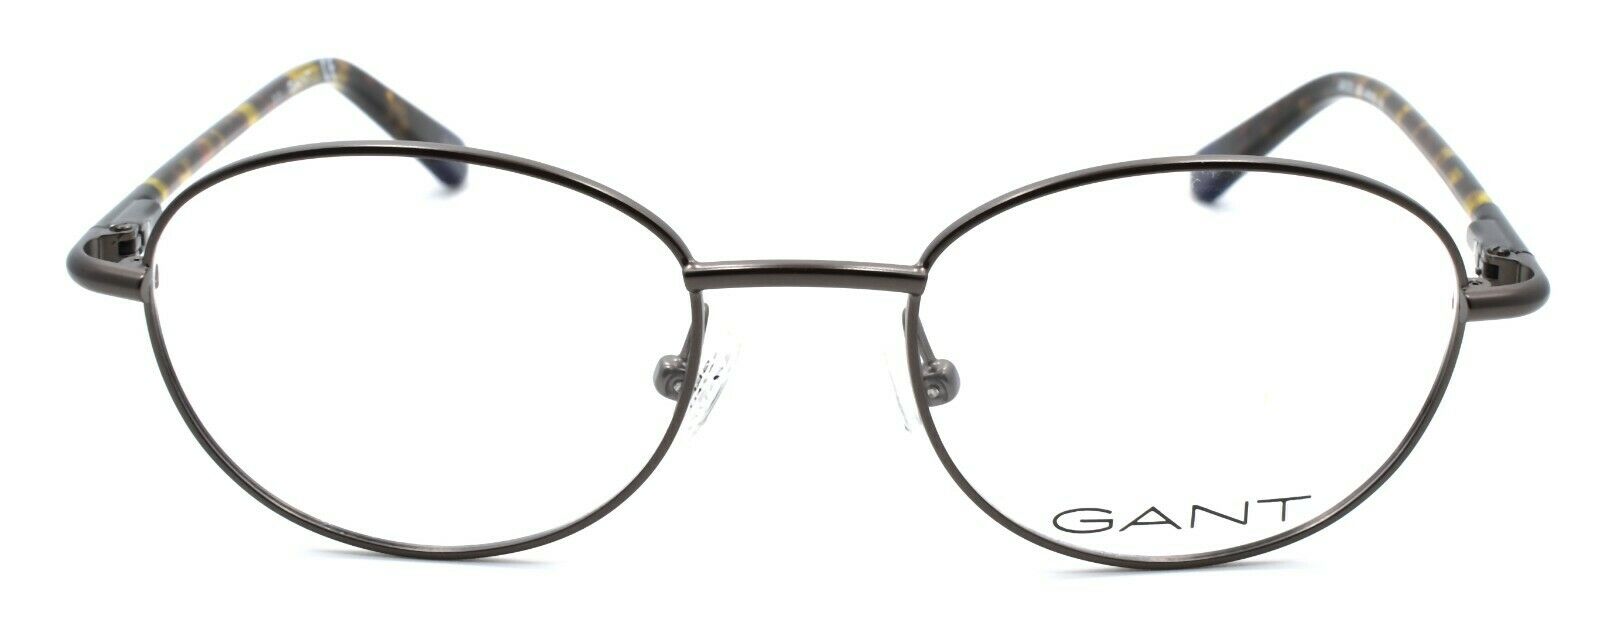 2-GANT GA3131 009 Men's Eyeglasses Frames 48-18-140 Matte Gunmetal-664689837618-IKSpecs